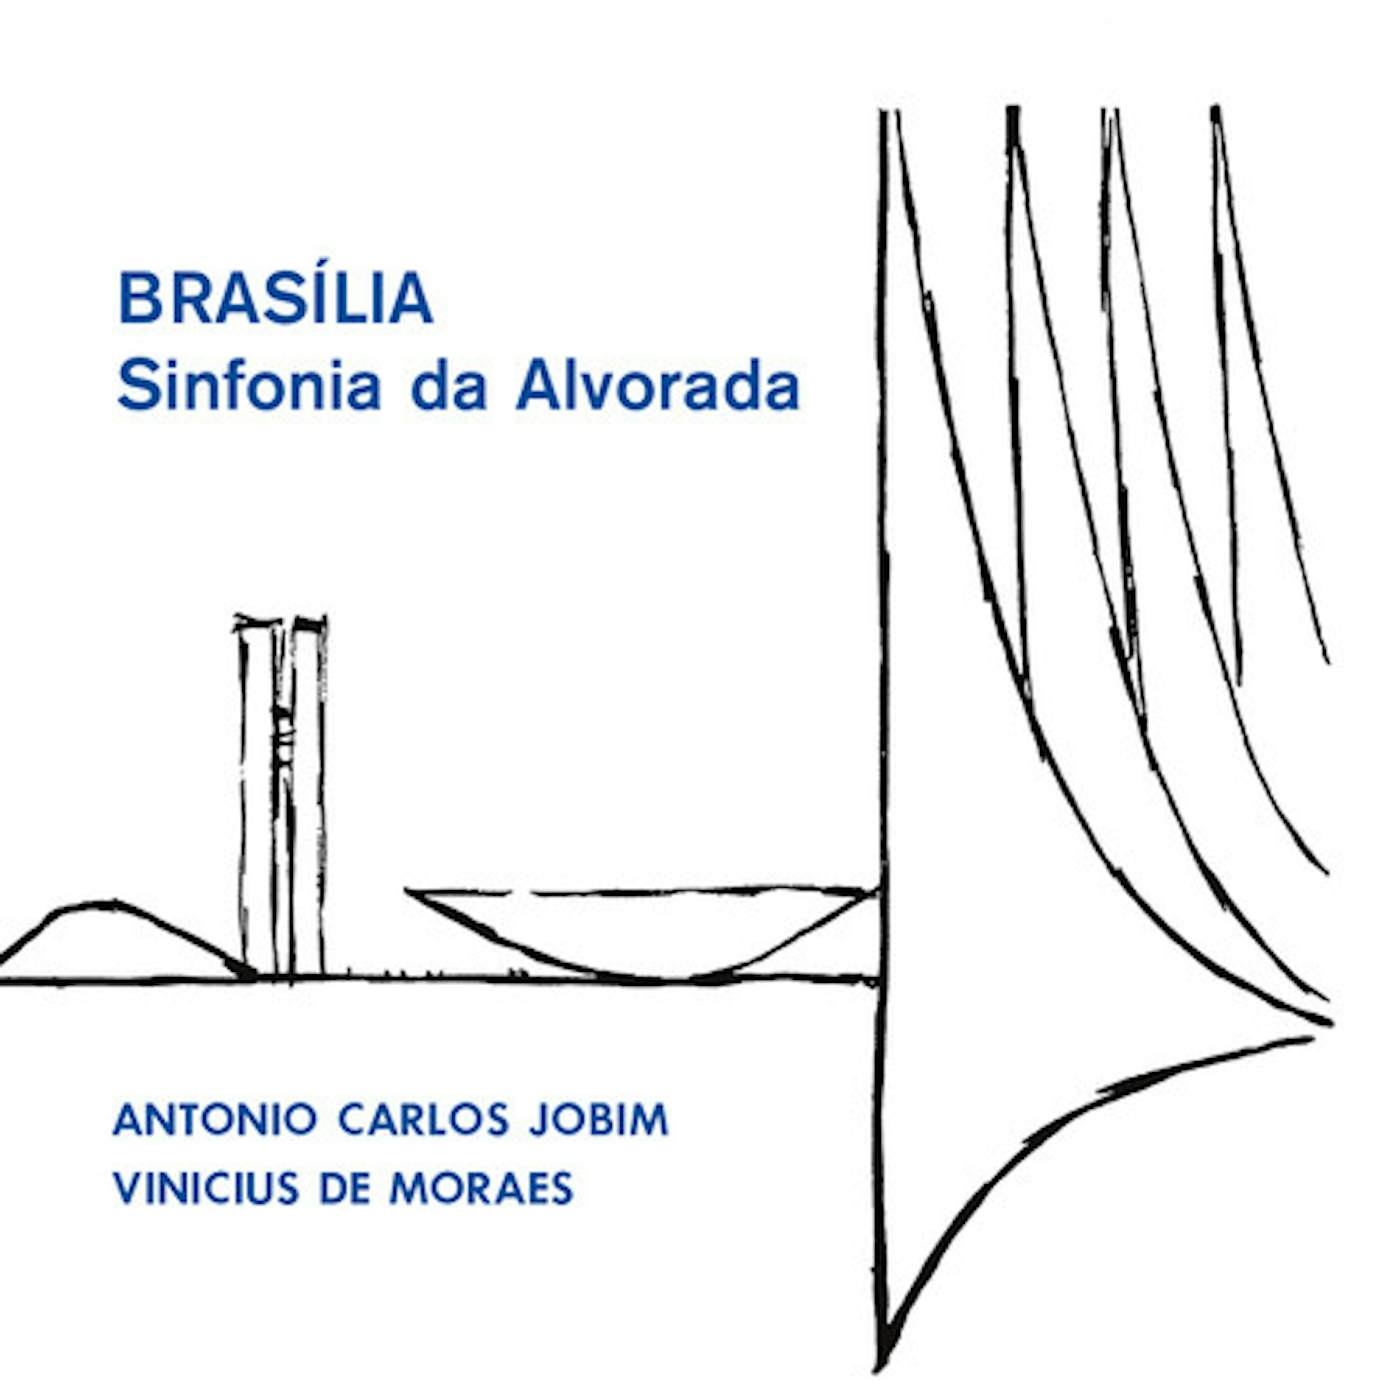 Antonio Carlos Jobim & Vinicius De Moraes BRASILIA - SINFONIA DA ALVORADA Vinyl Record